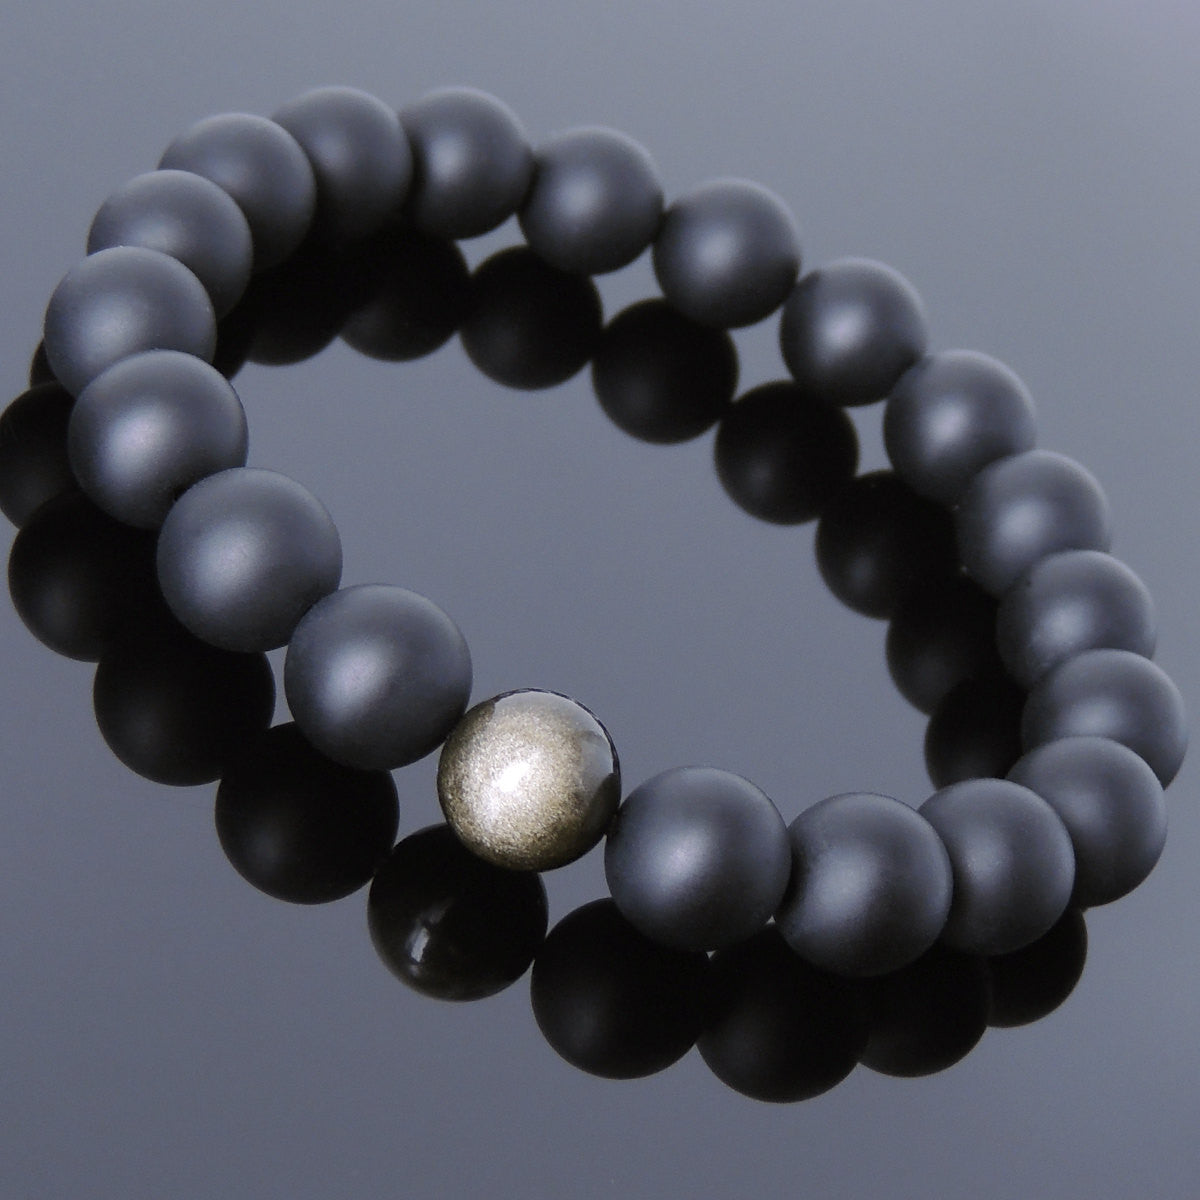 10mm Golden Obsidian & Matte Black Onyx Healing Gemstone Bracelet - Handmade by Gem & Silver BR713